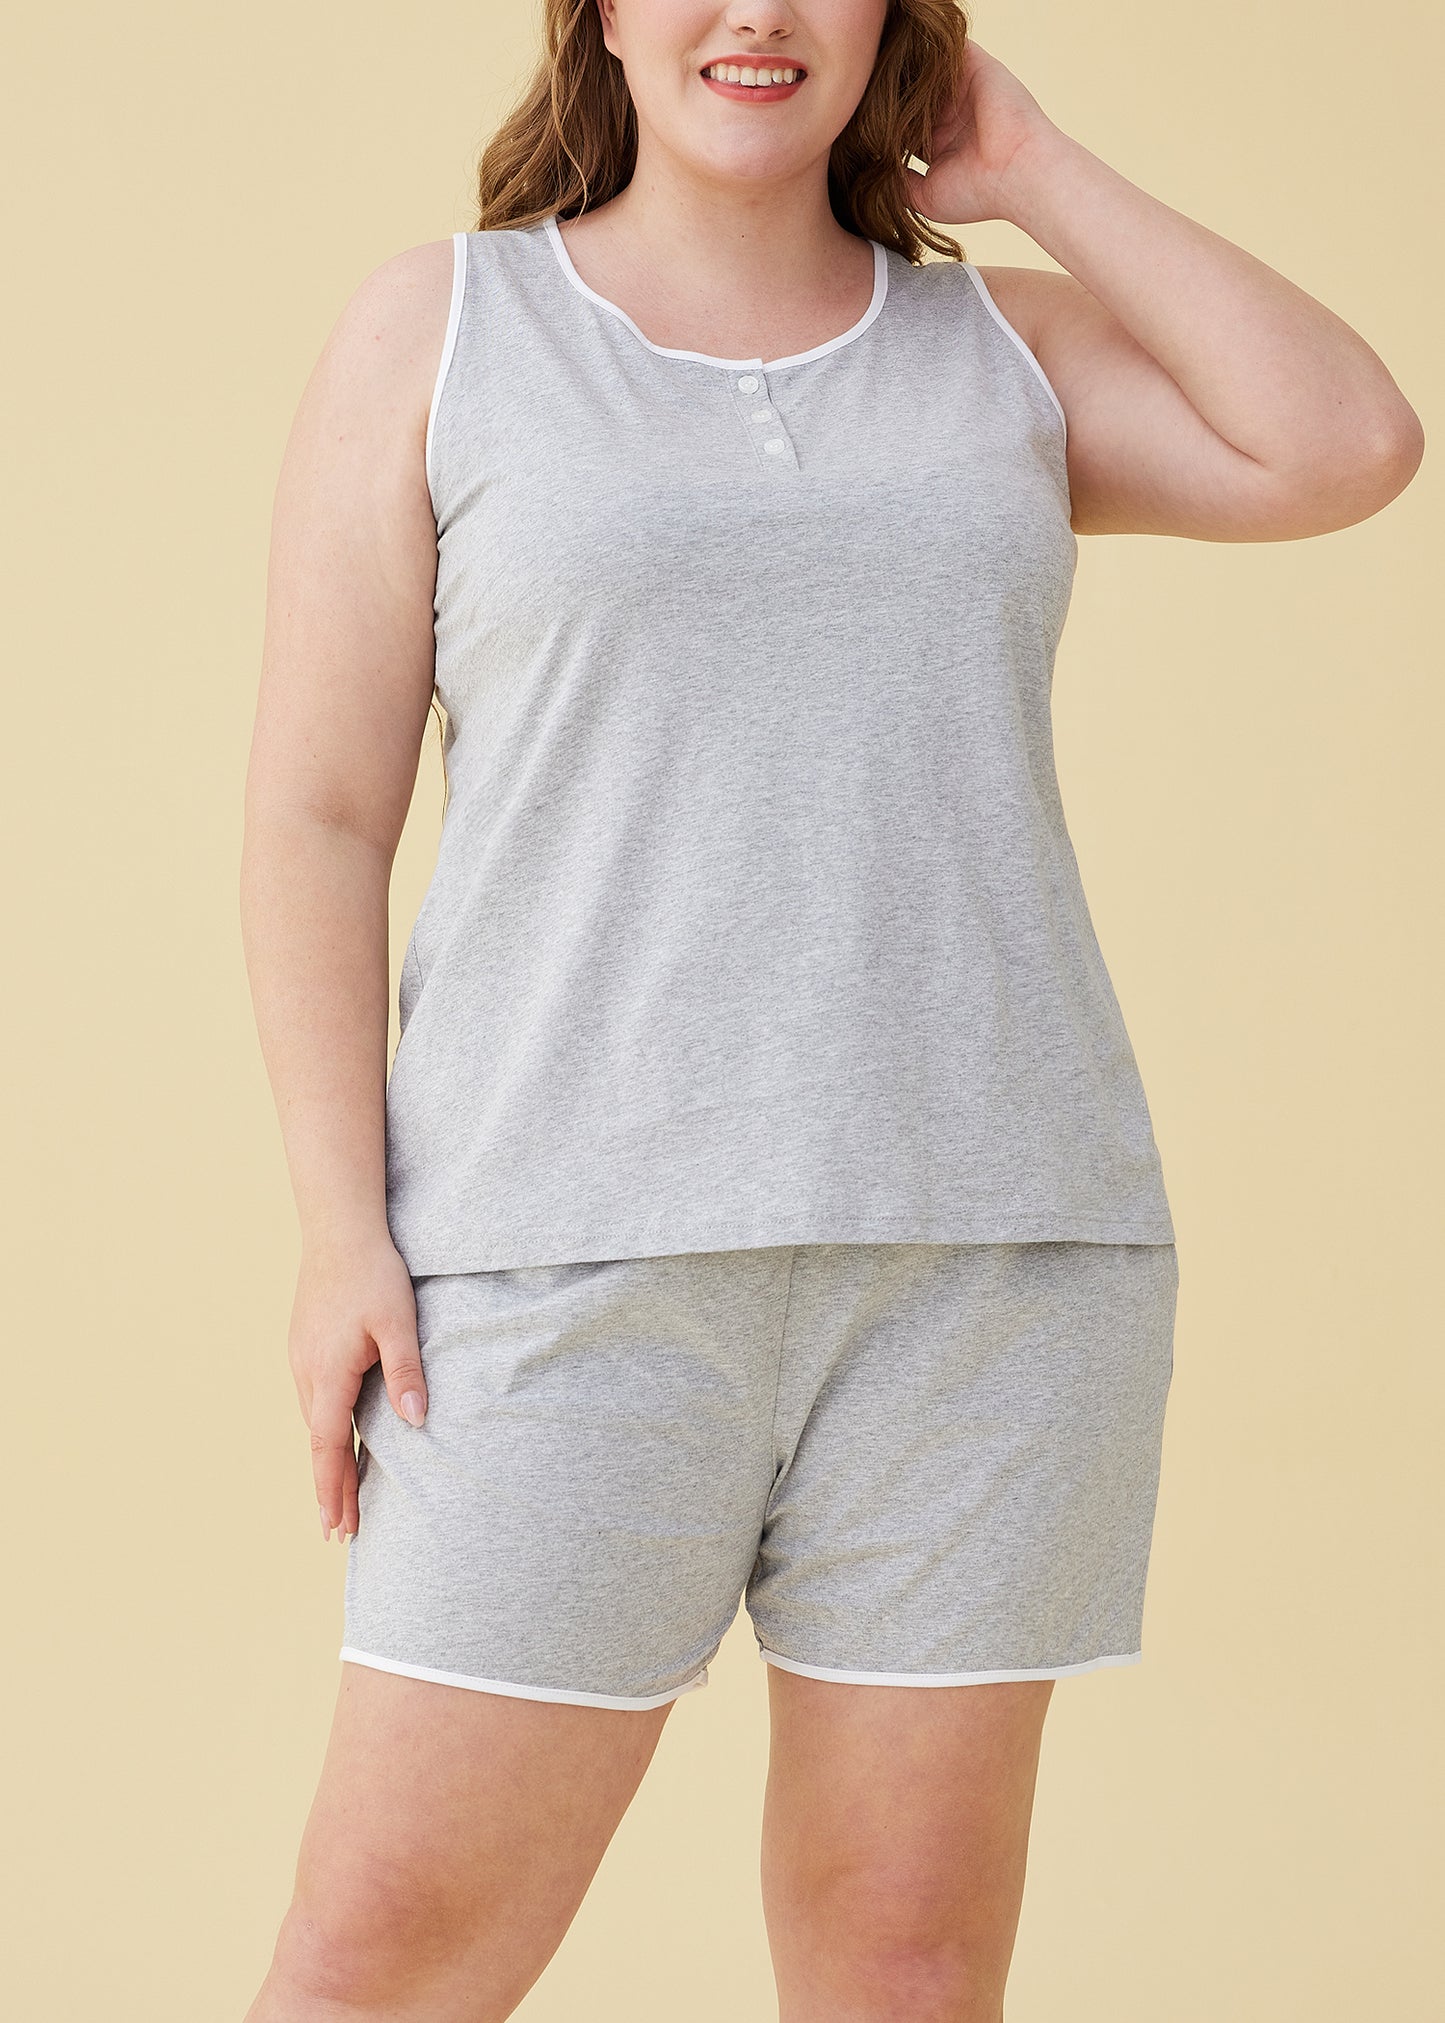 Women's Cotton Loungewear Set Sleep Tank Top with Pajama Shorts